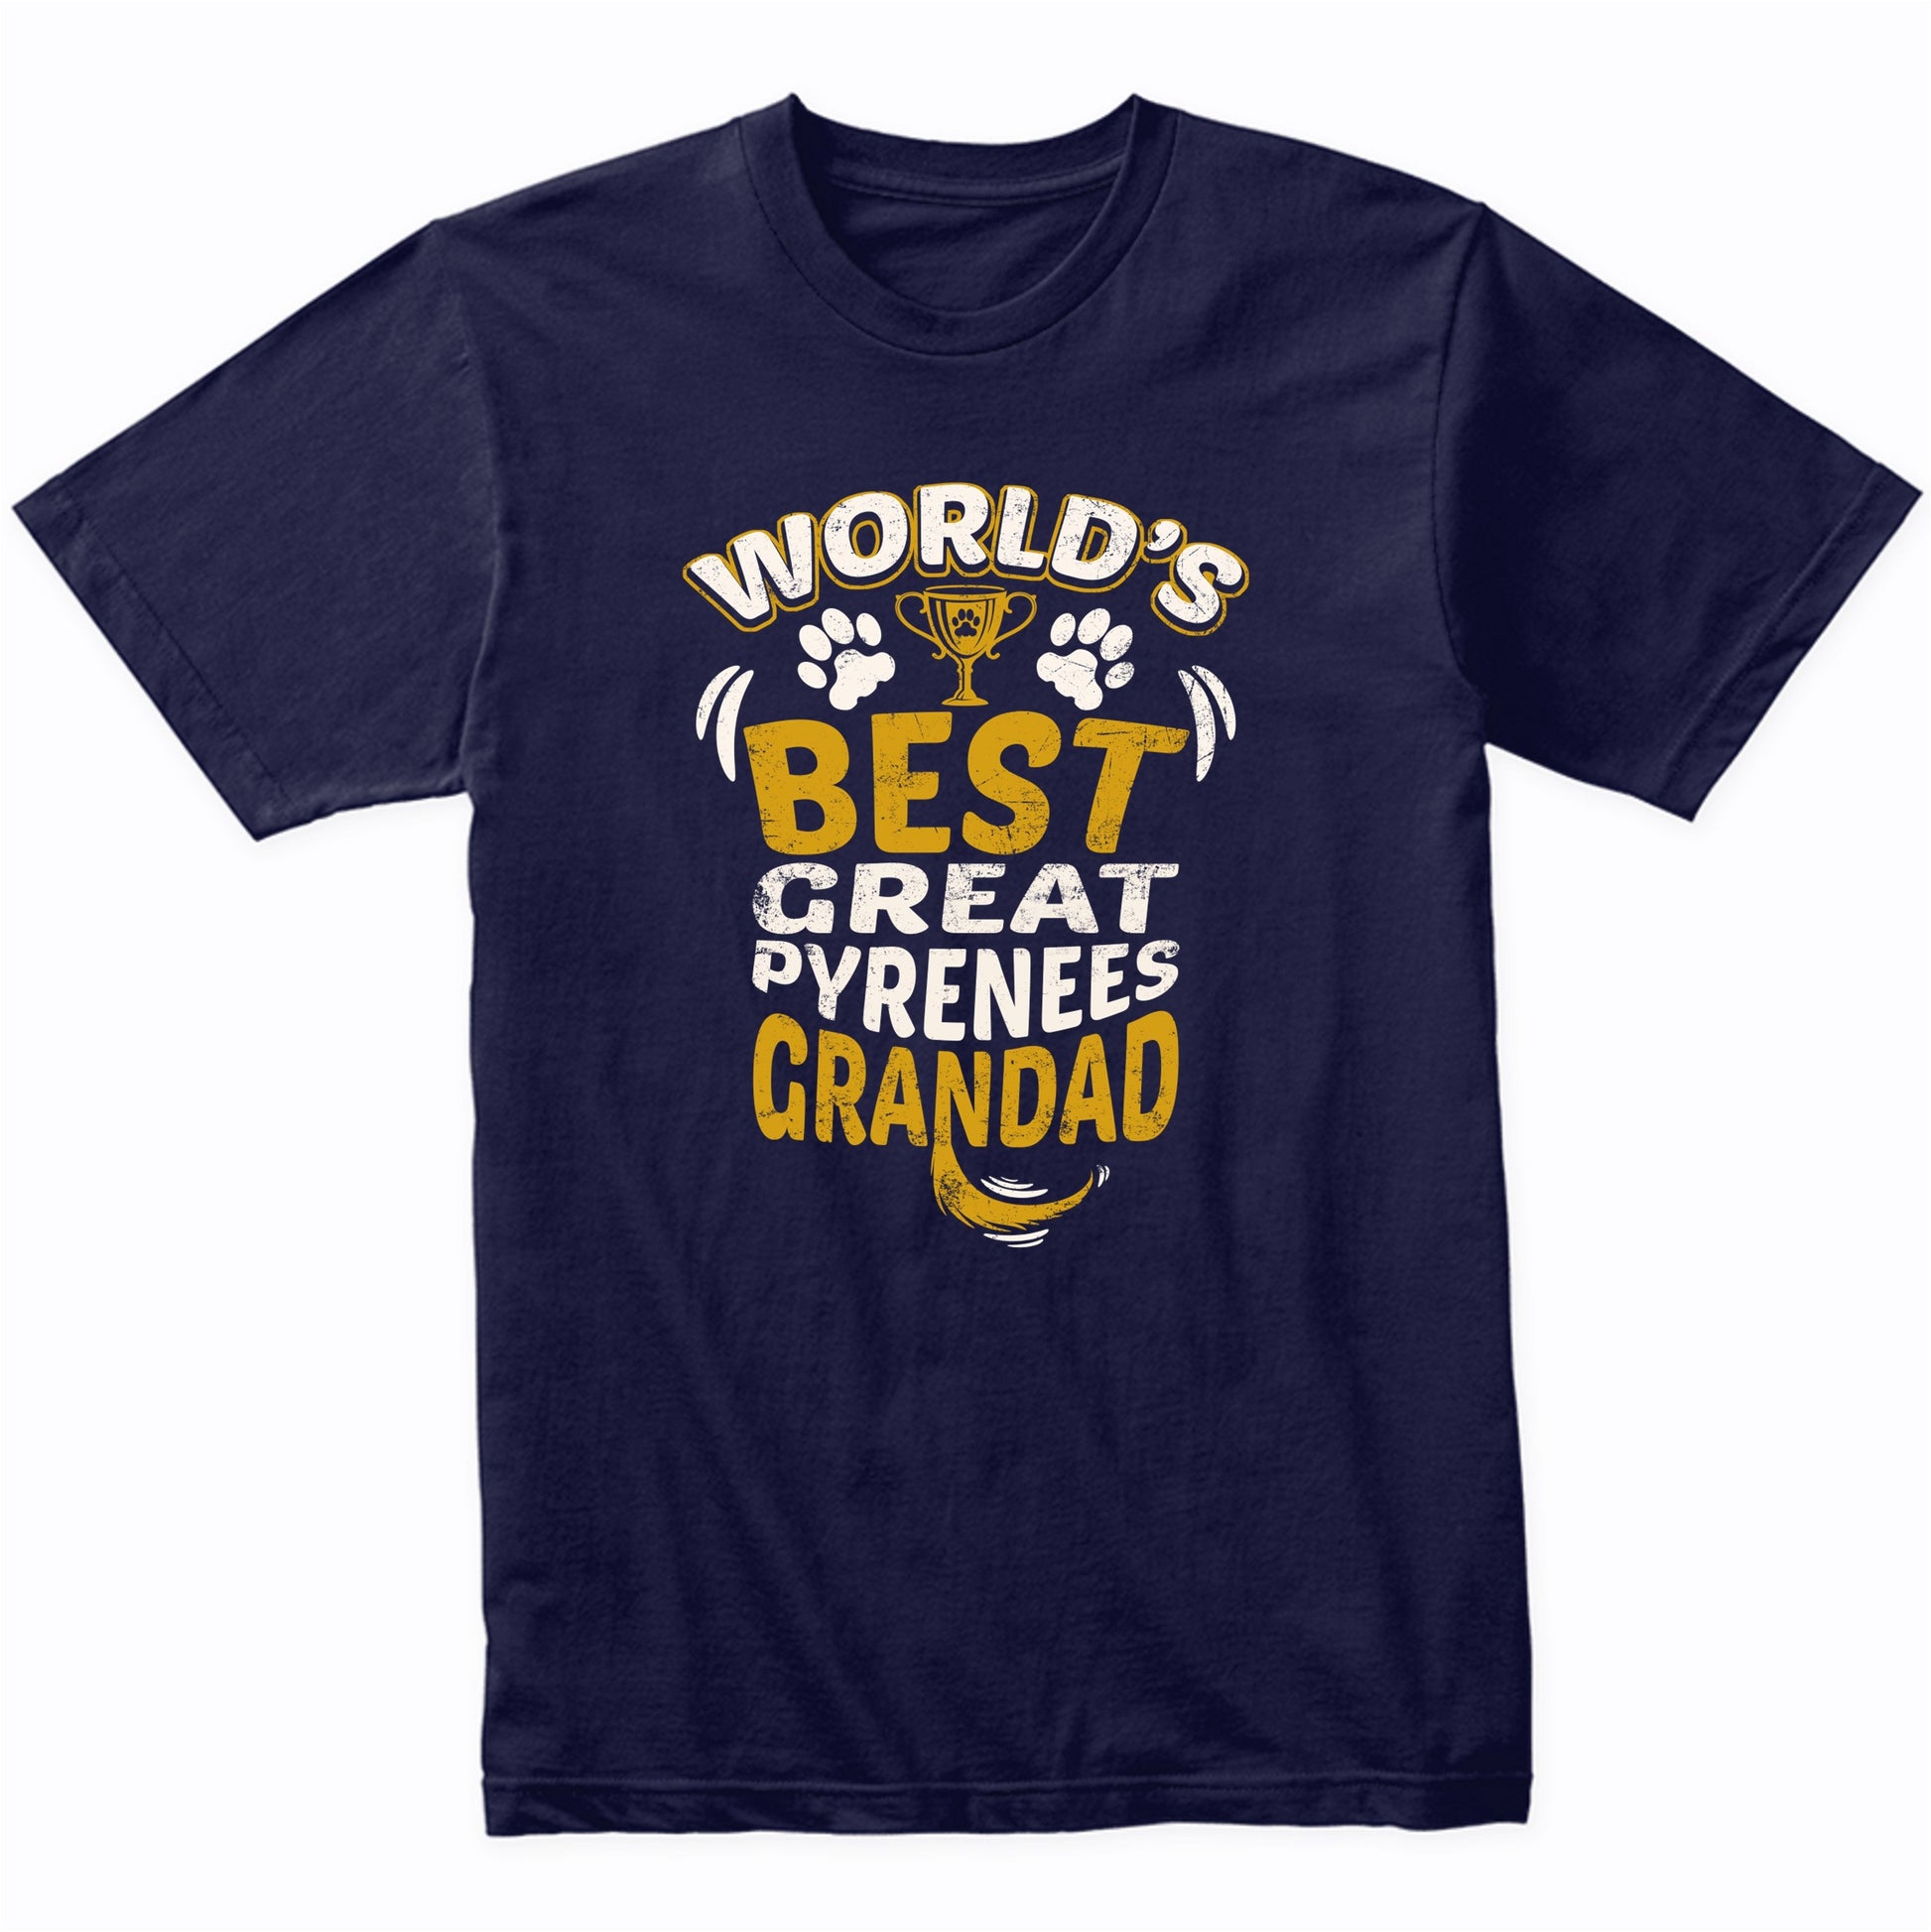 World's Best Great Pyrenees Grandad Graphic T-Shirt